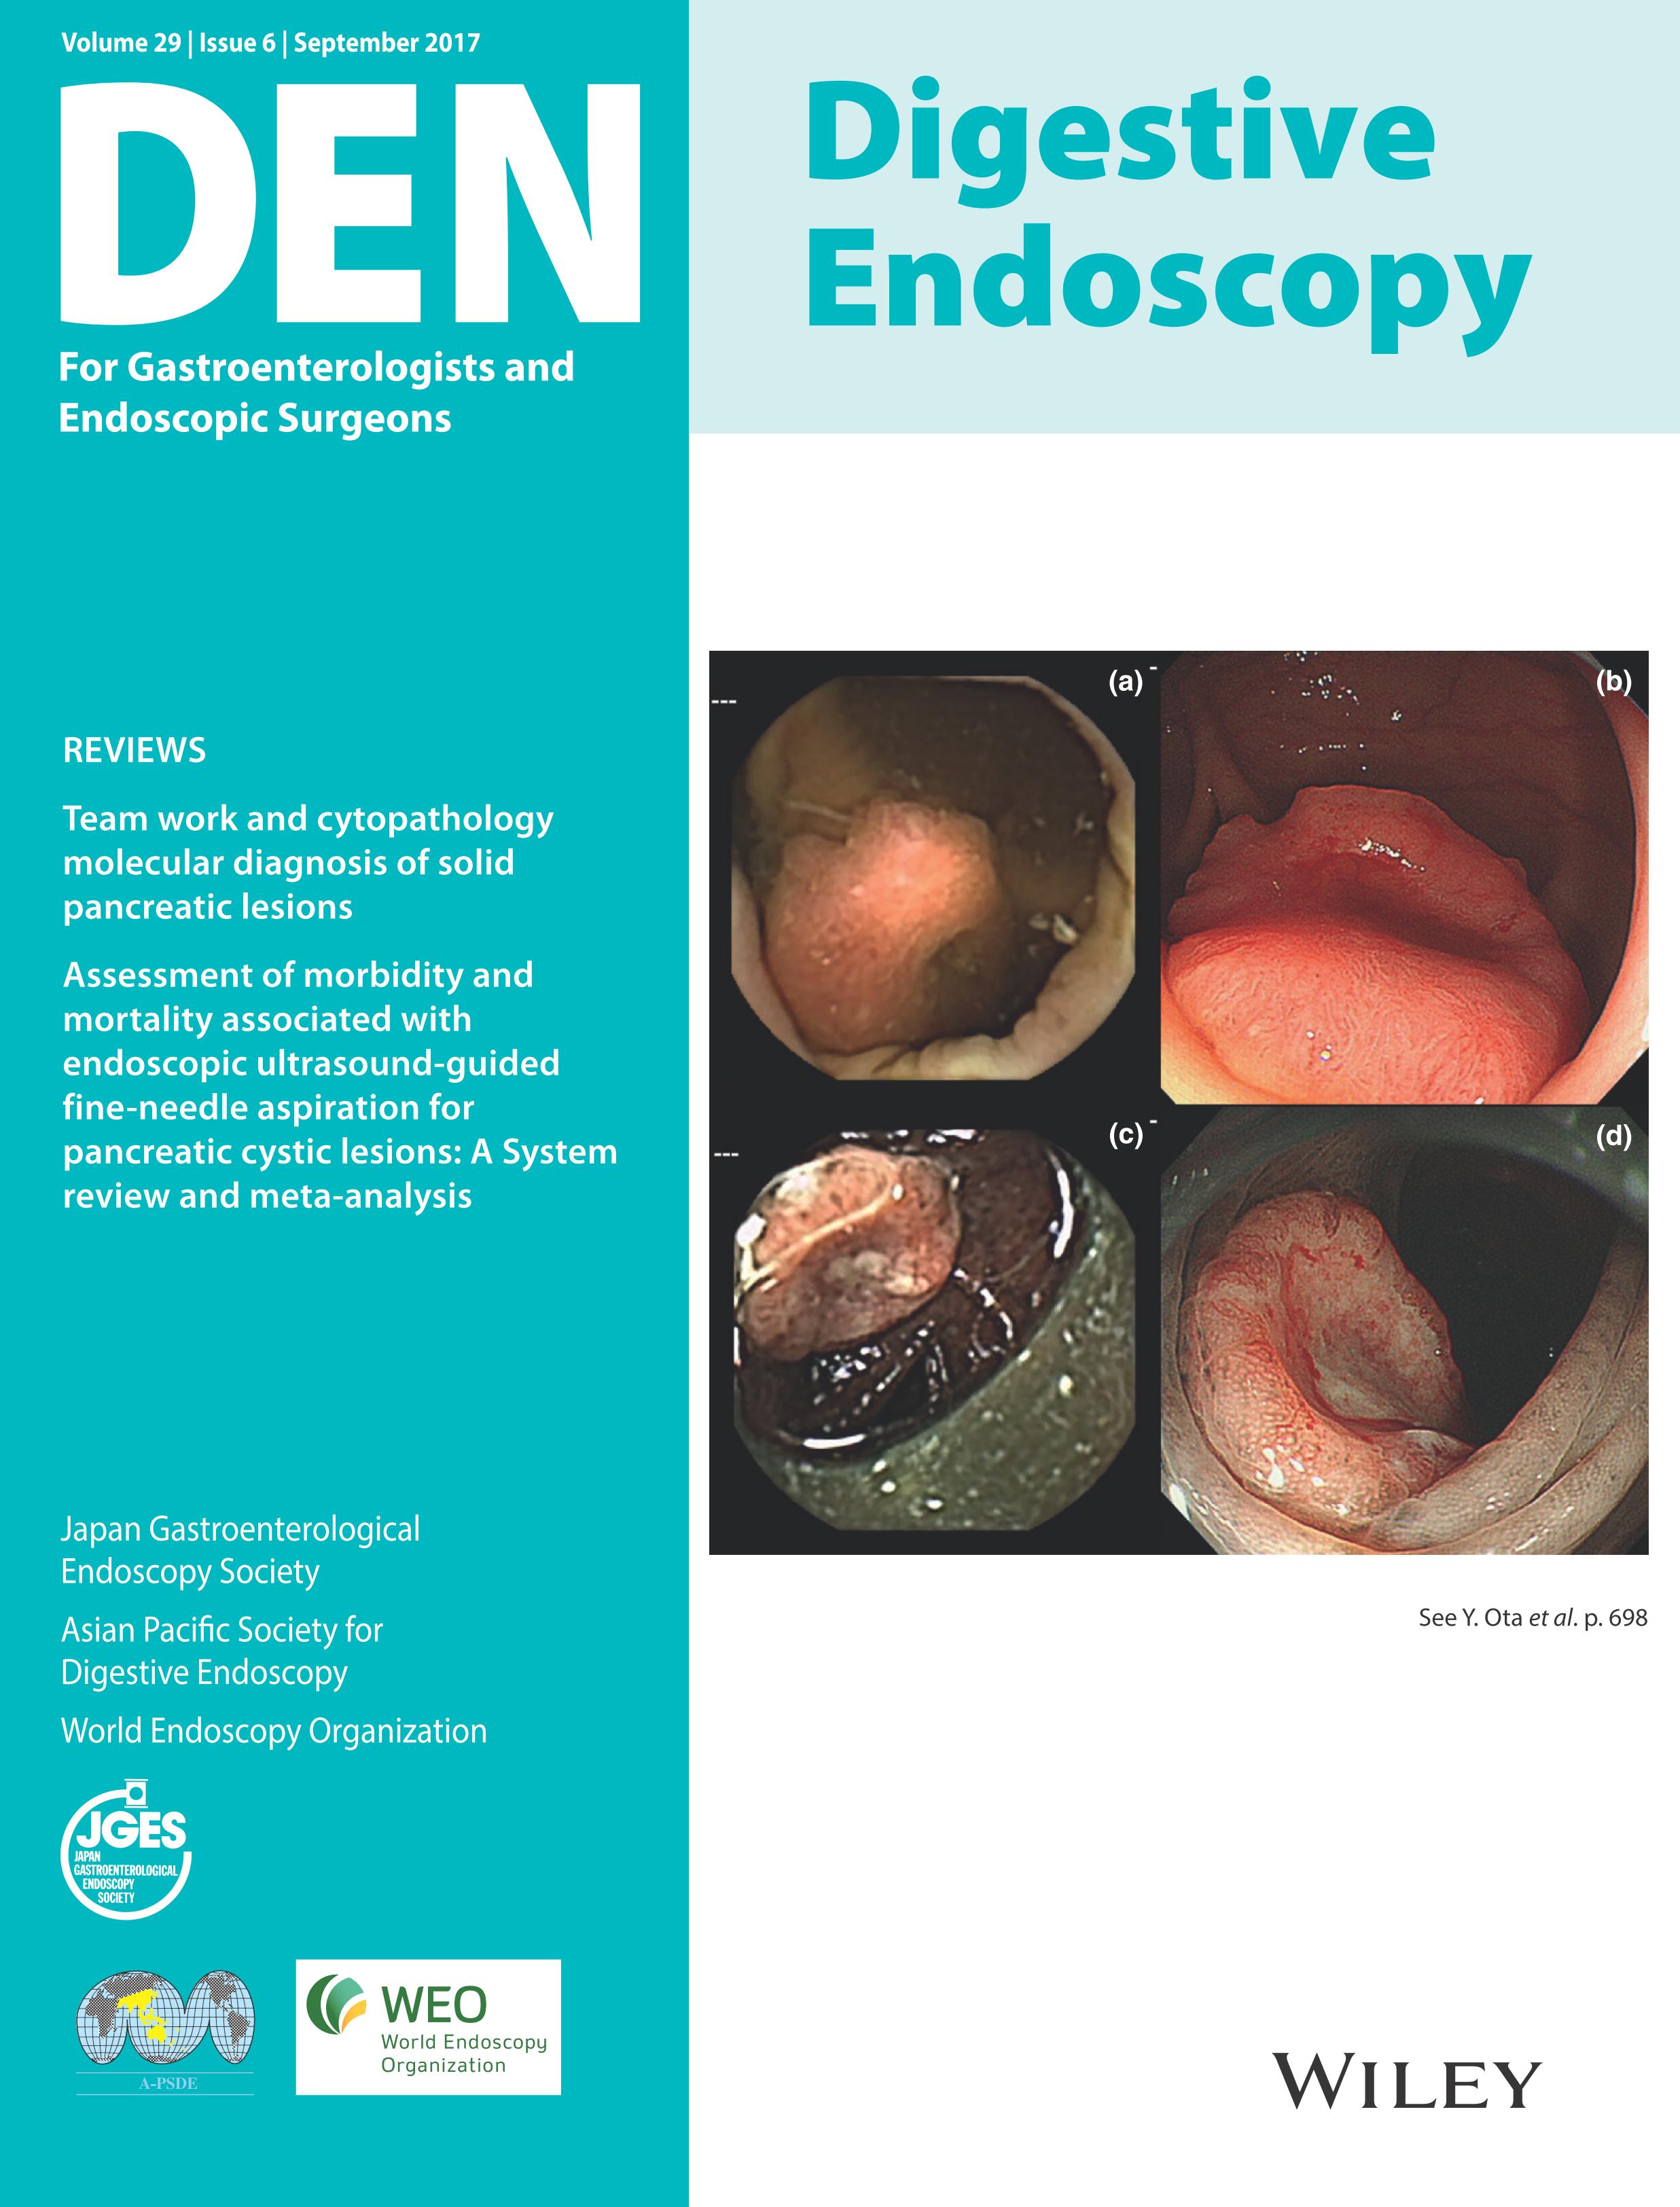 Digestive Endoscopy Vol29-6